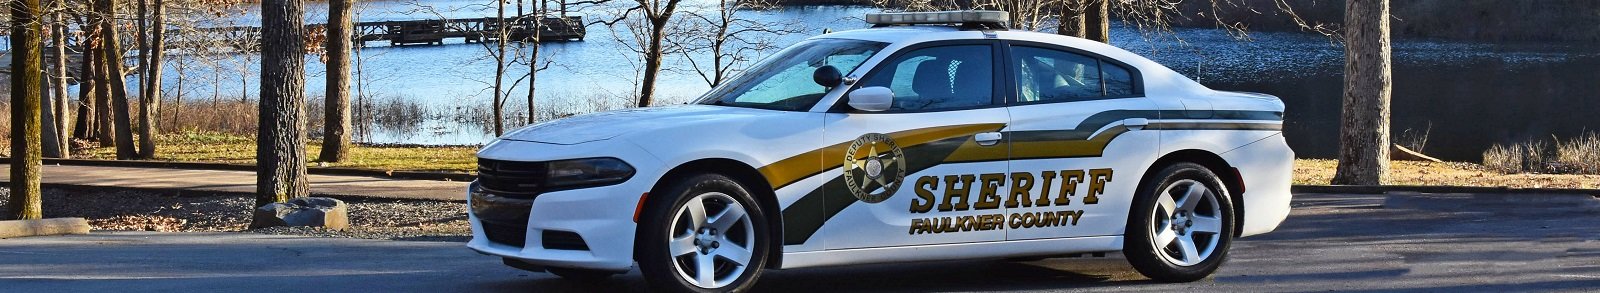 Parked sheriff squad car